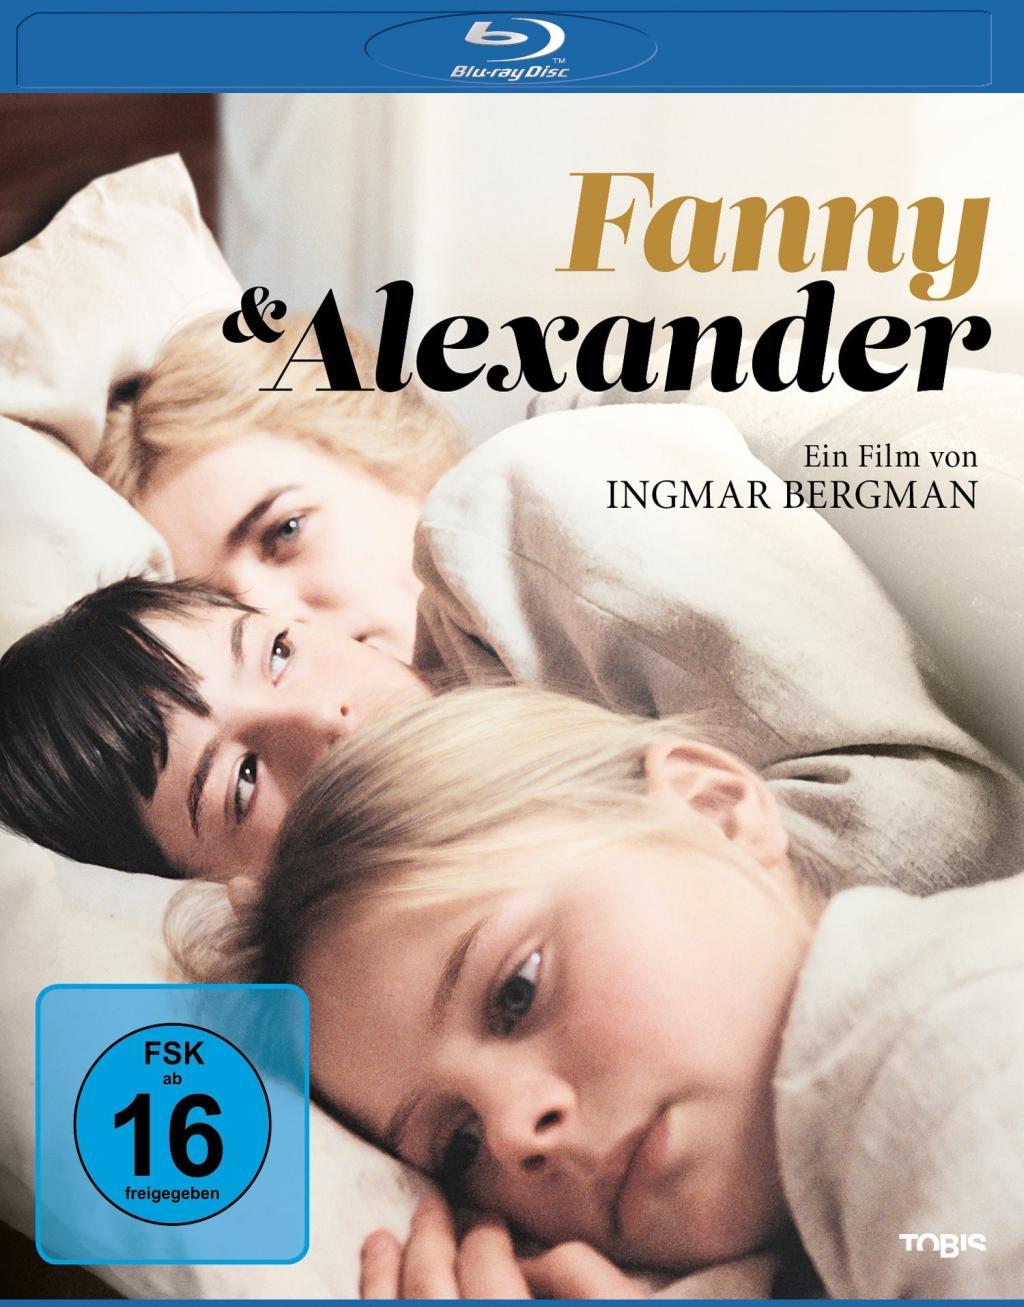 Video Fanny Alexander BD Ingmar Bergman